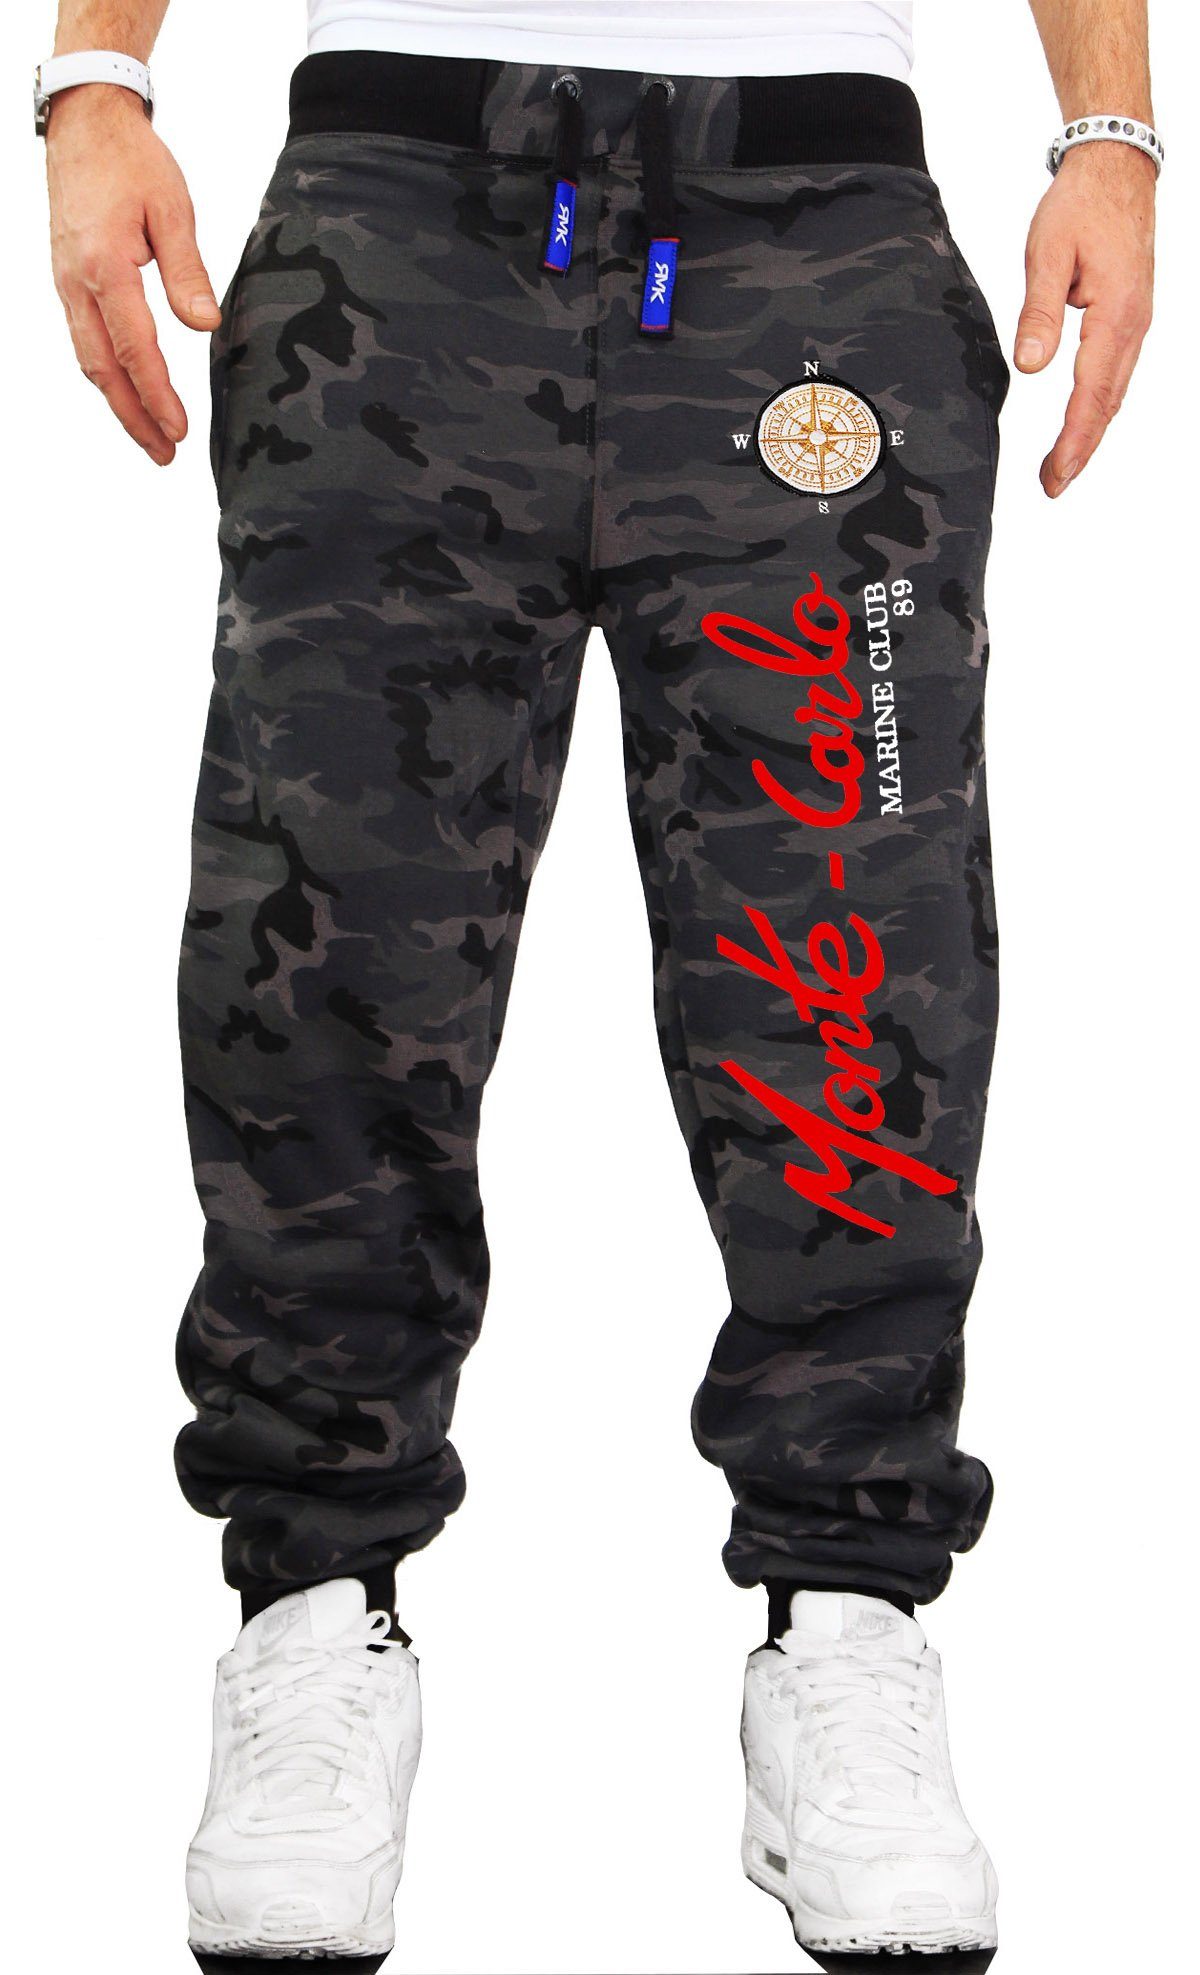 RMK Jogginghose Trainingshose Fitnesshose Sweatpants Camouflage Army